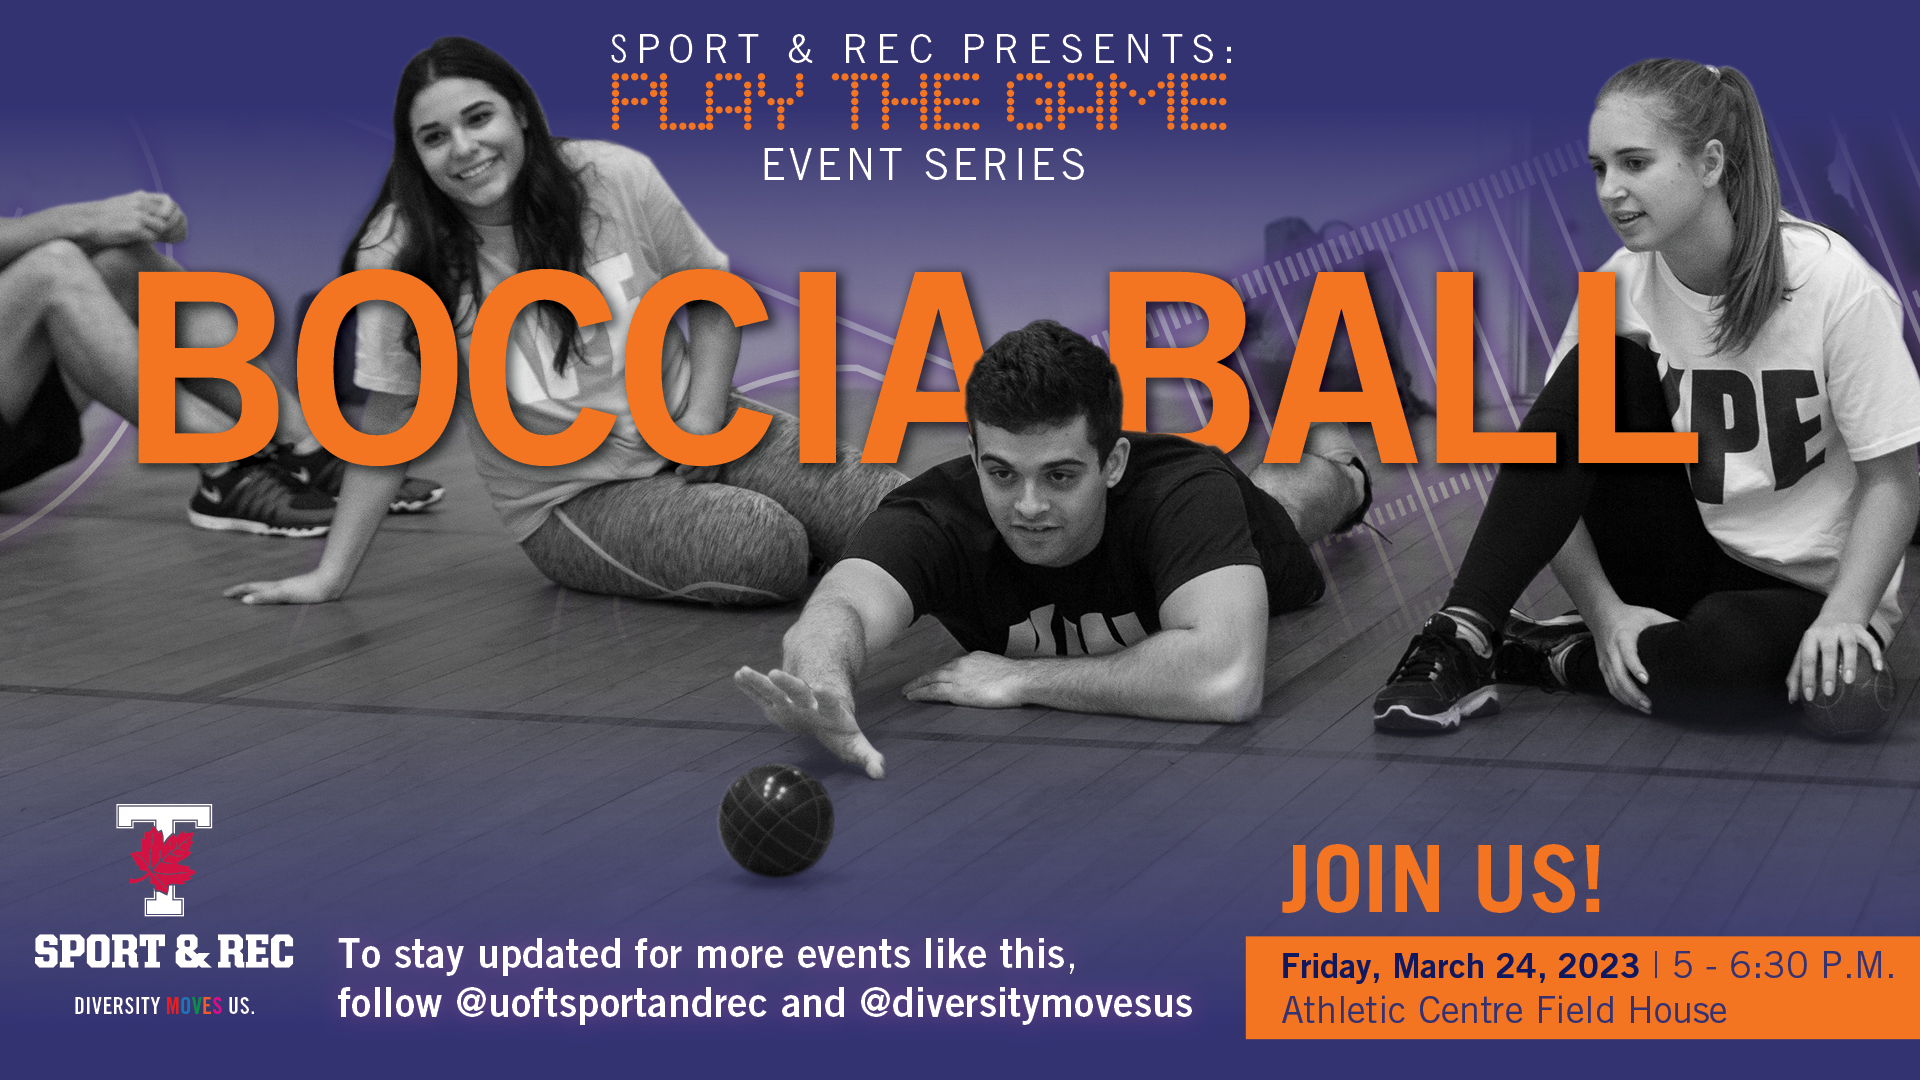 Image shows three students playing Boccia Ball